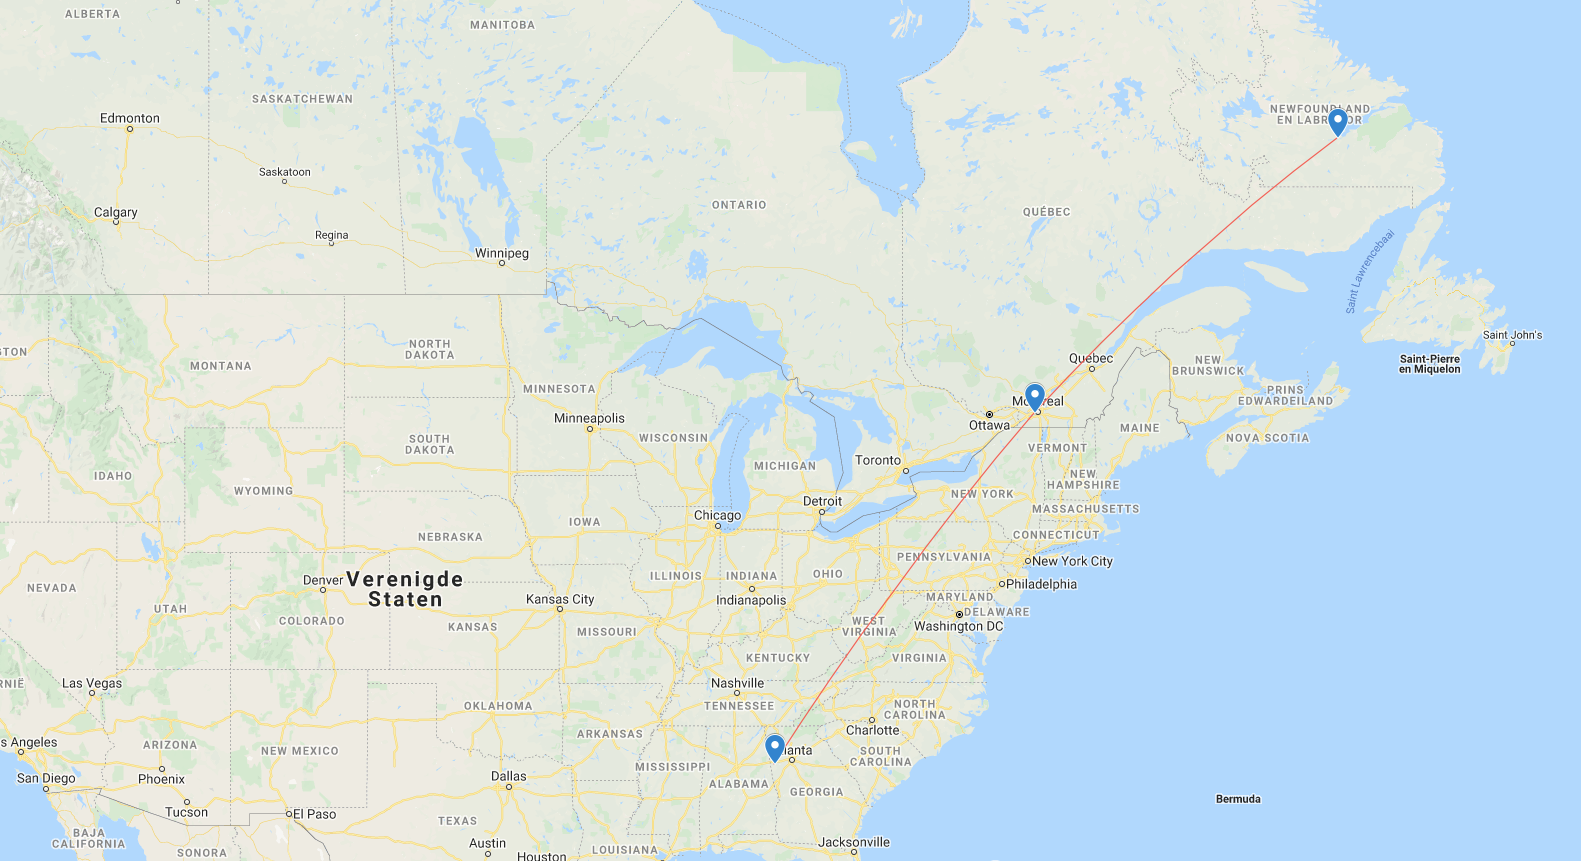 Je bekijkt nu Carrollton > Montreal > Goose Bay